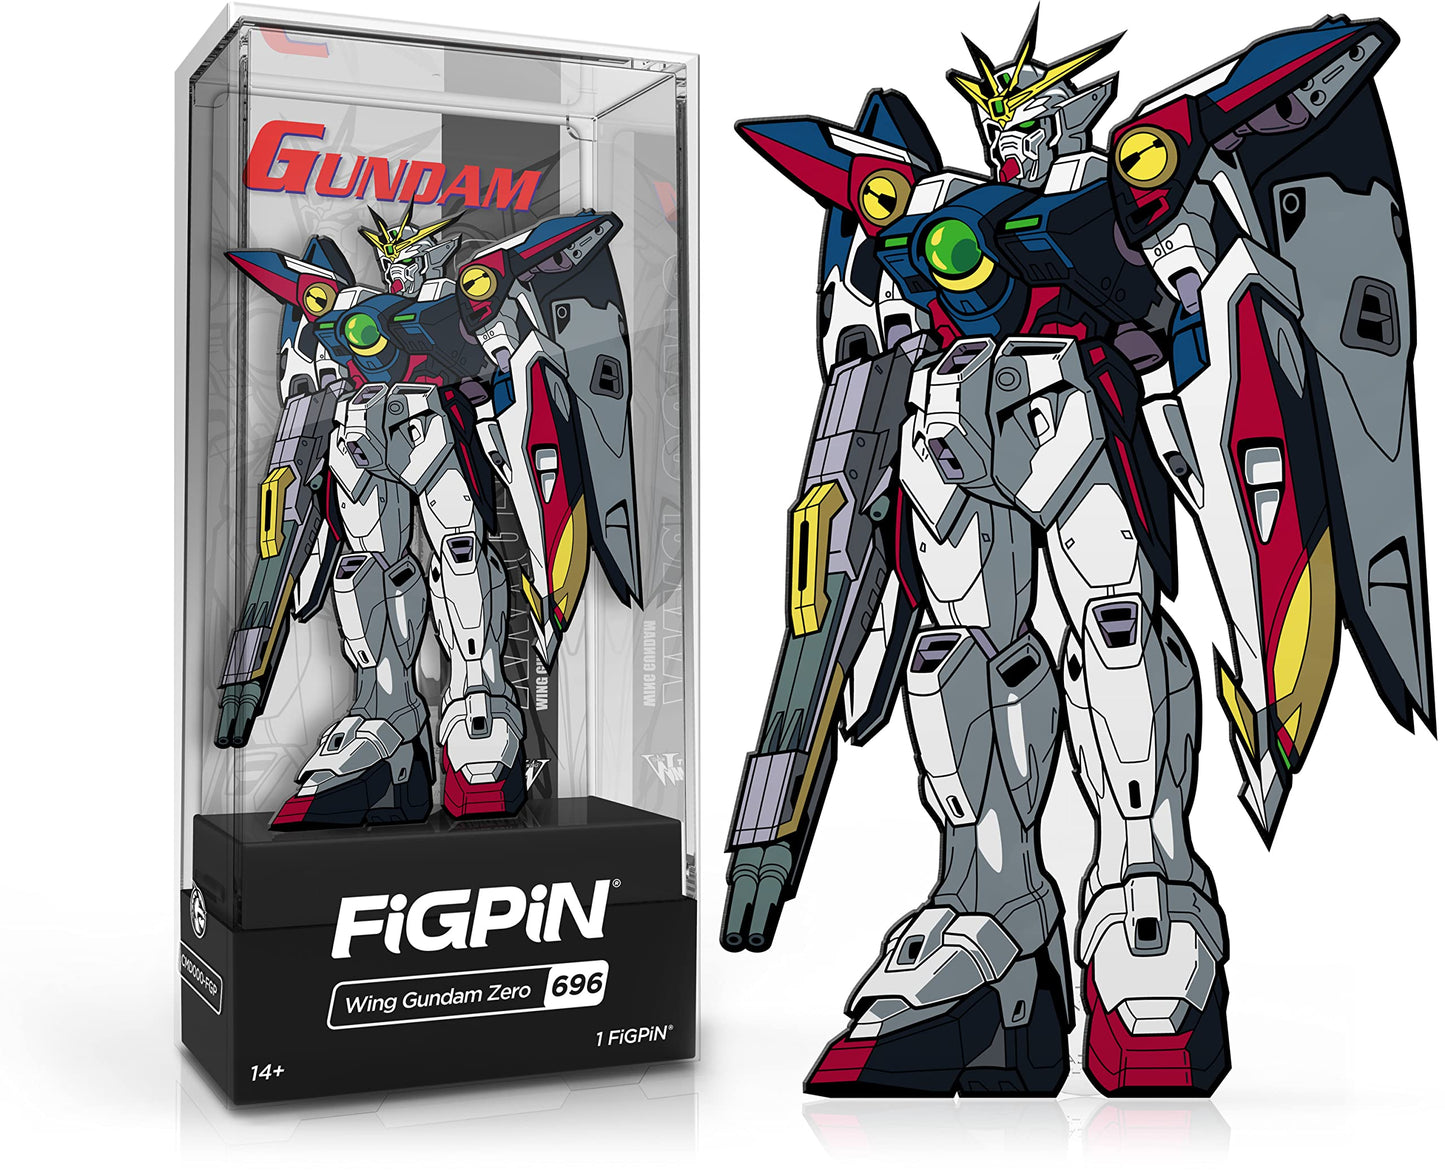 FiGPiN Wing Gundam Zero #696 - Collectible Pin